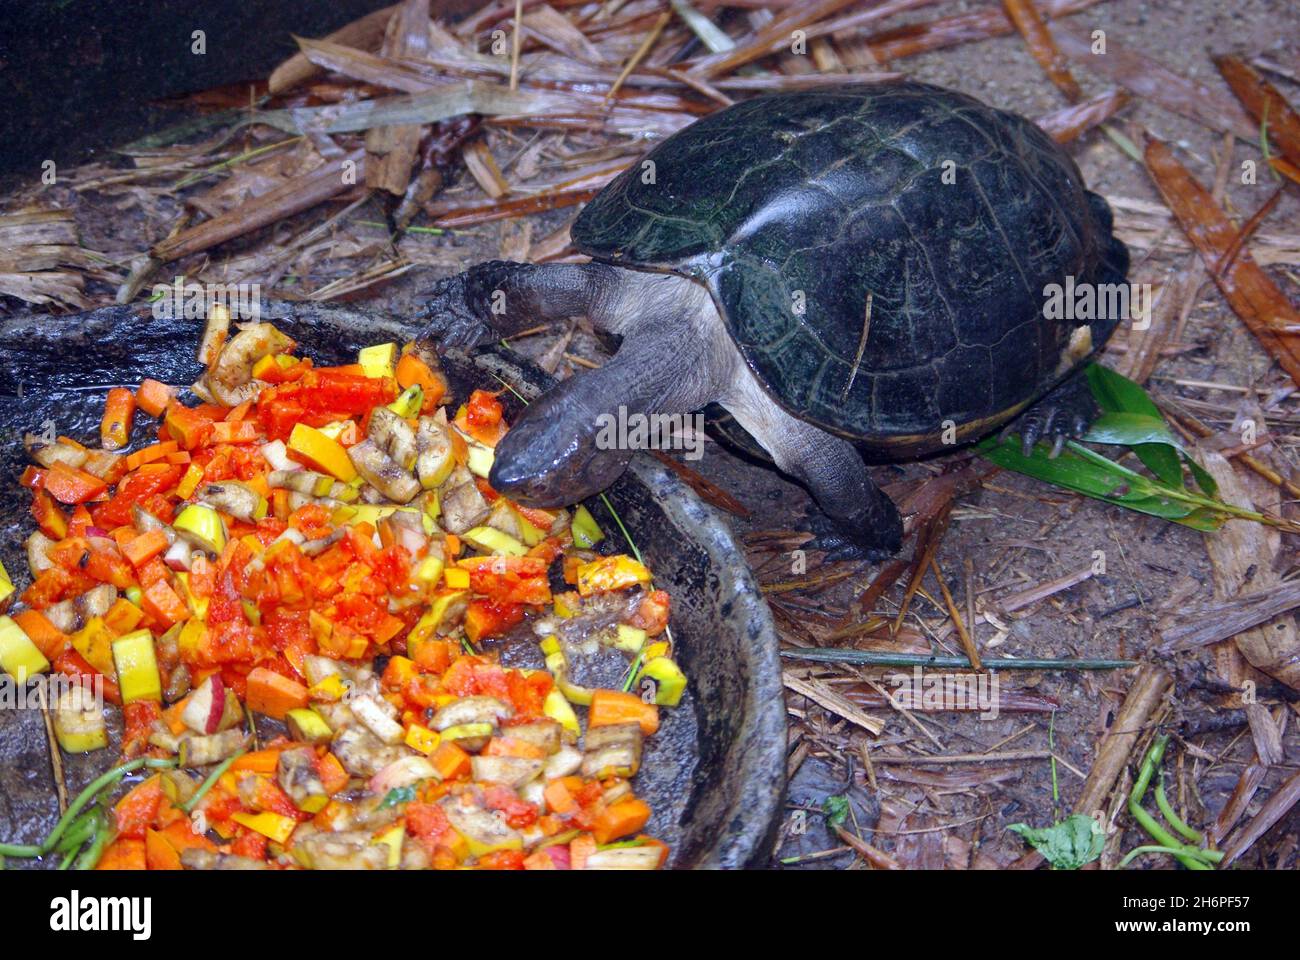 Black Marsh or Siamese temple Turtle, Siebenrockiella crassicollis, feeding vegetables Stock Photo